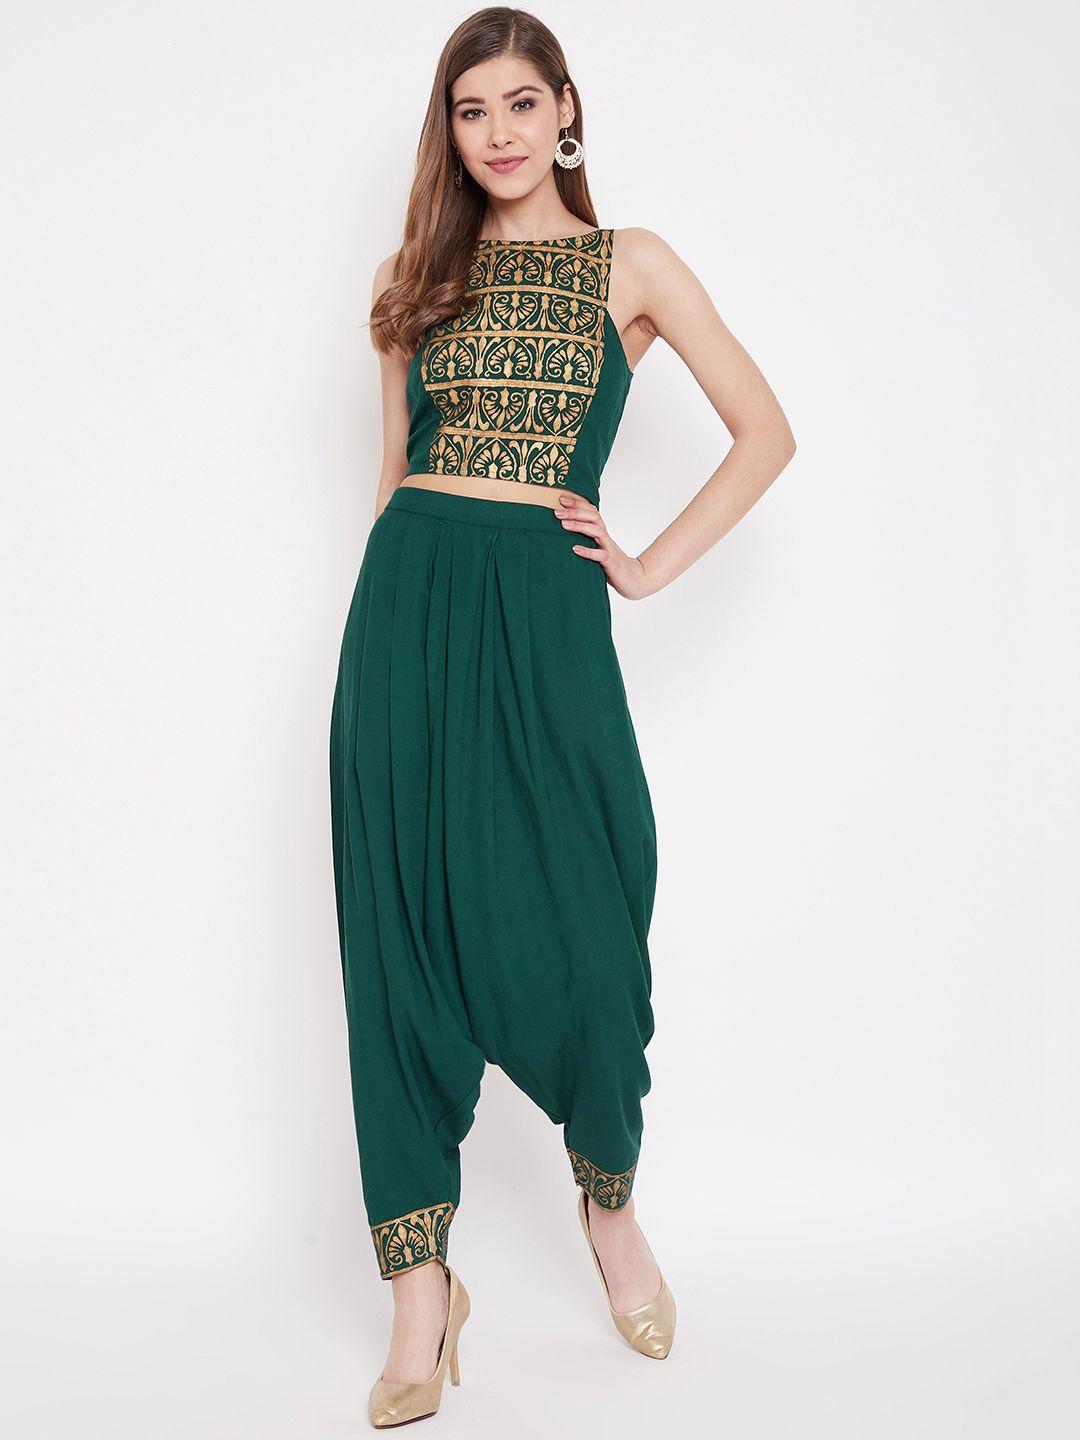 mabish by sonal jain women green & golden printed top with dhoti pants